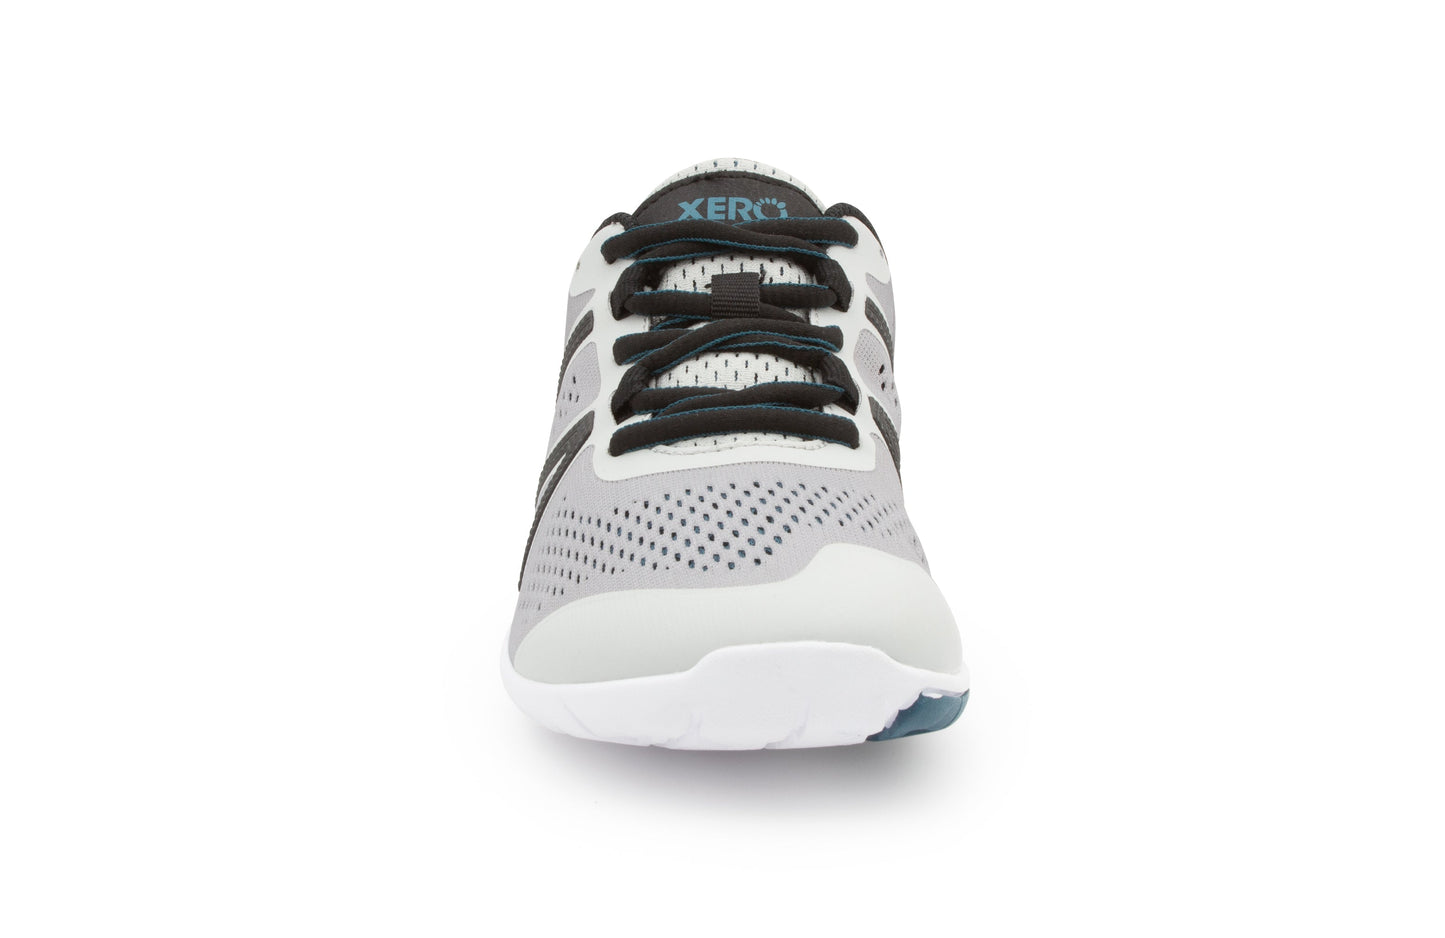 Xero Shoes HFS Womens barfods træningssko/løbesko til kvinder i farven aurora gray, forfra